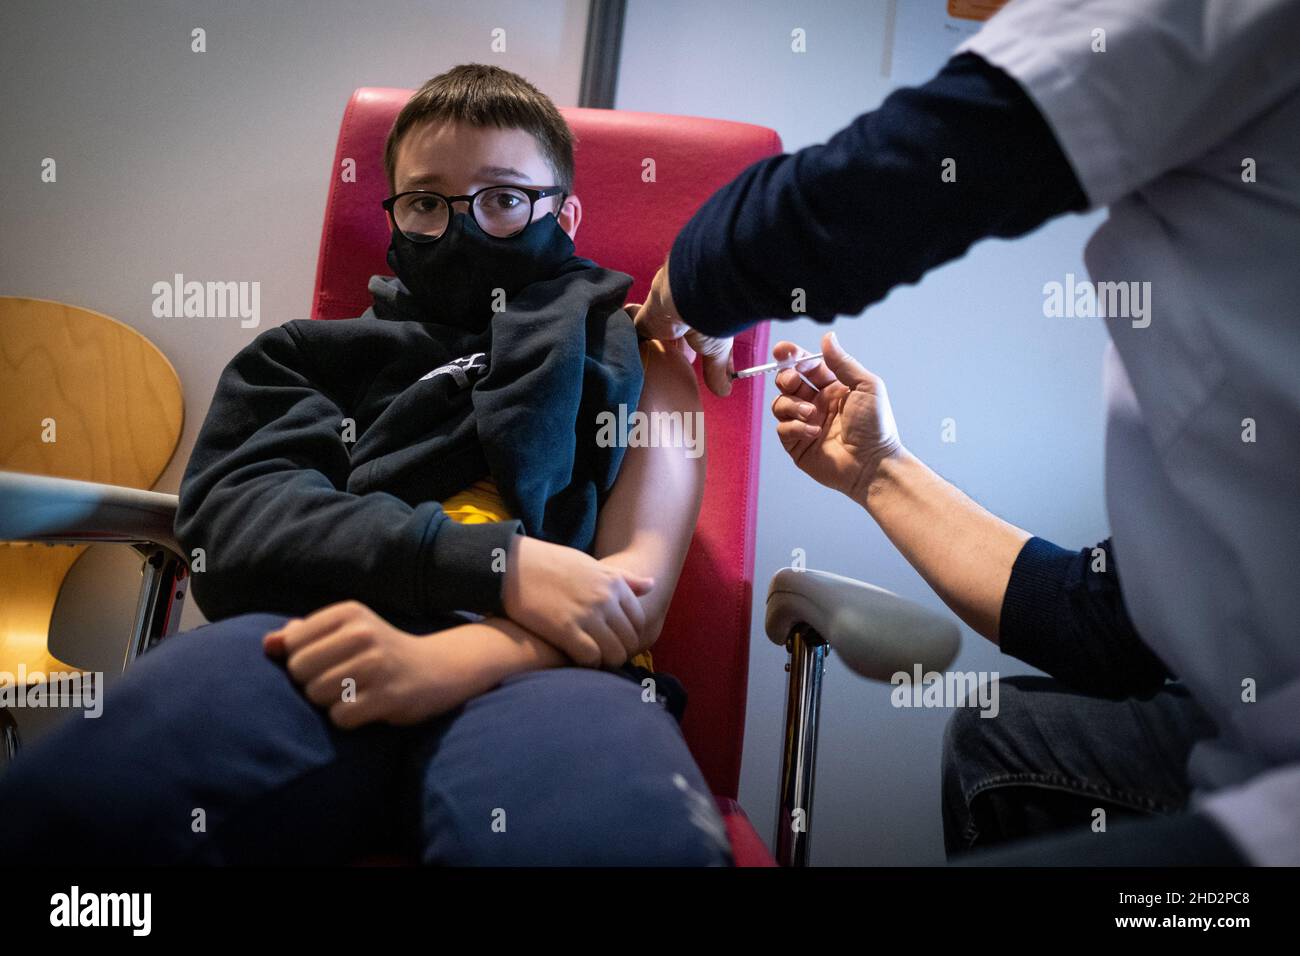 Vaccination d'un enfant de 12 ans avec un vaccin Pfizer dans un centre de vaccination Covid-19 à Dinan, en Bretagne.France. Banque D'Images